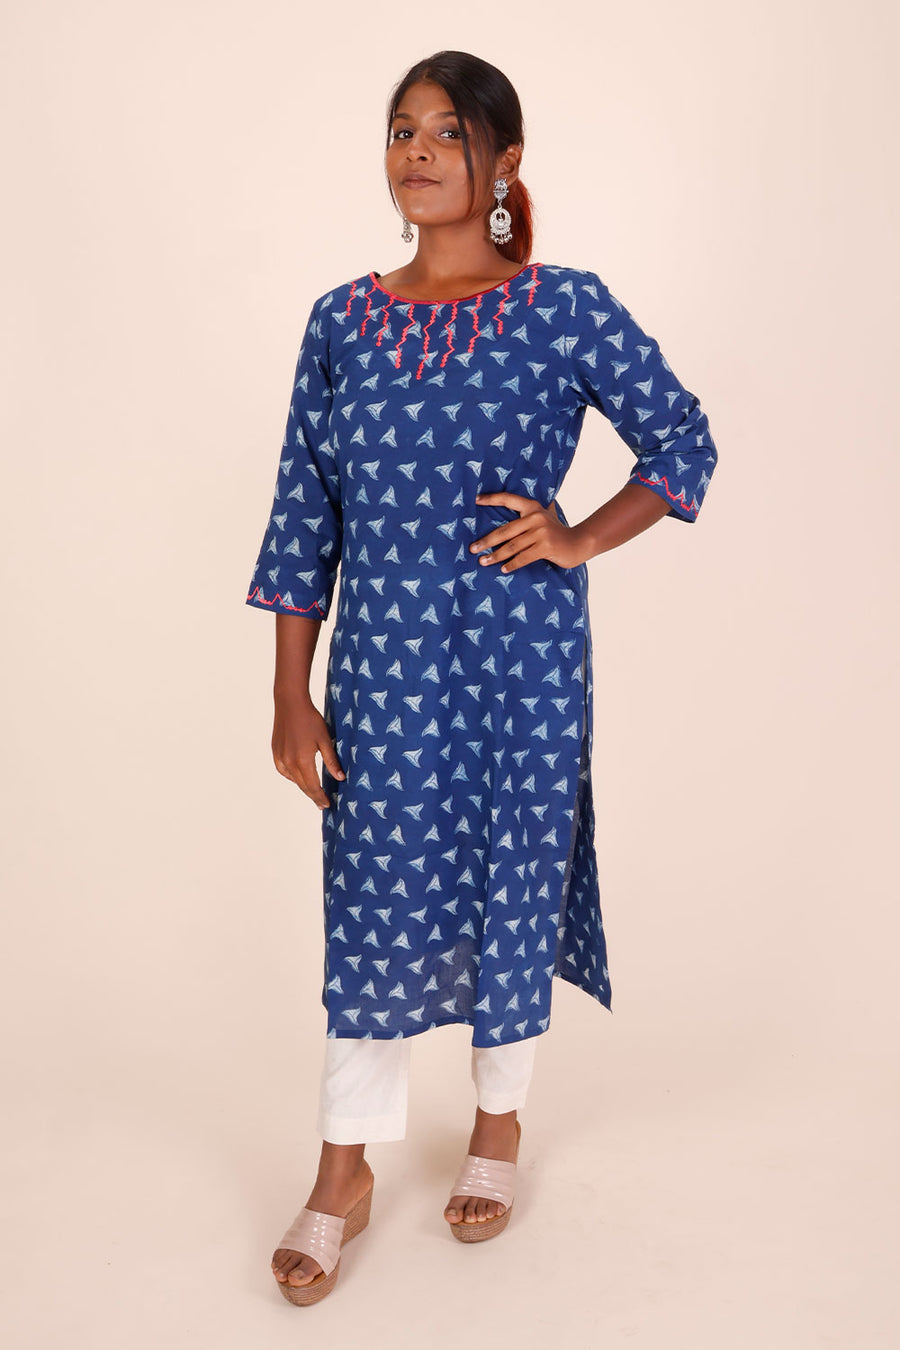 Indigo Dyed & Embroidered Dabu Printed Cotton Kurta 10068994 - Avishya